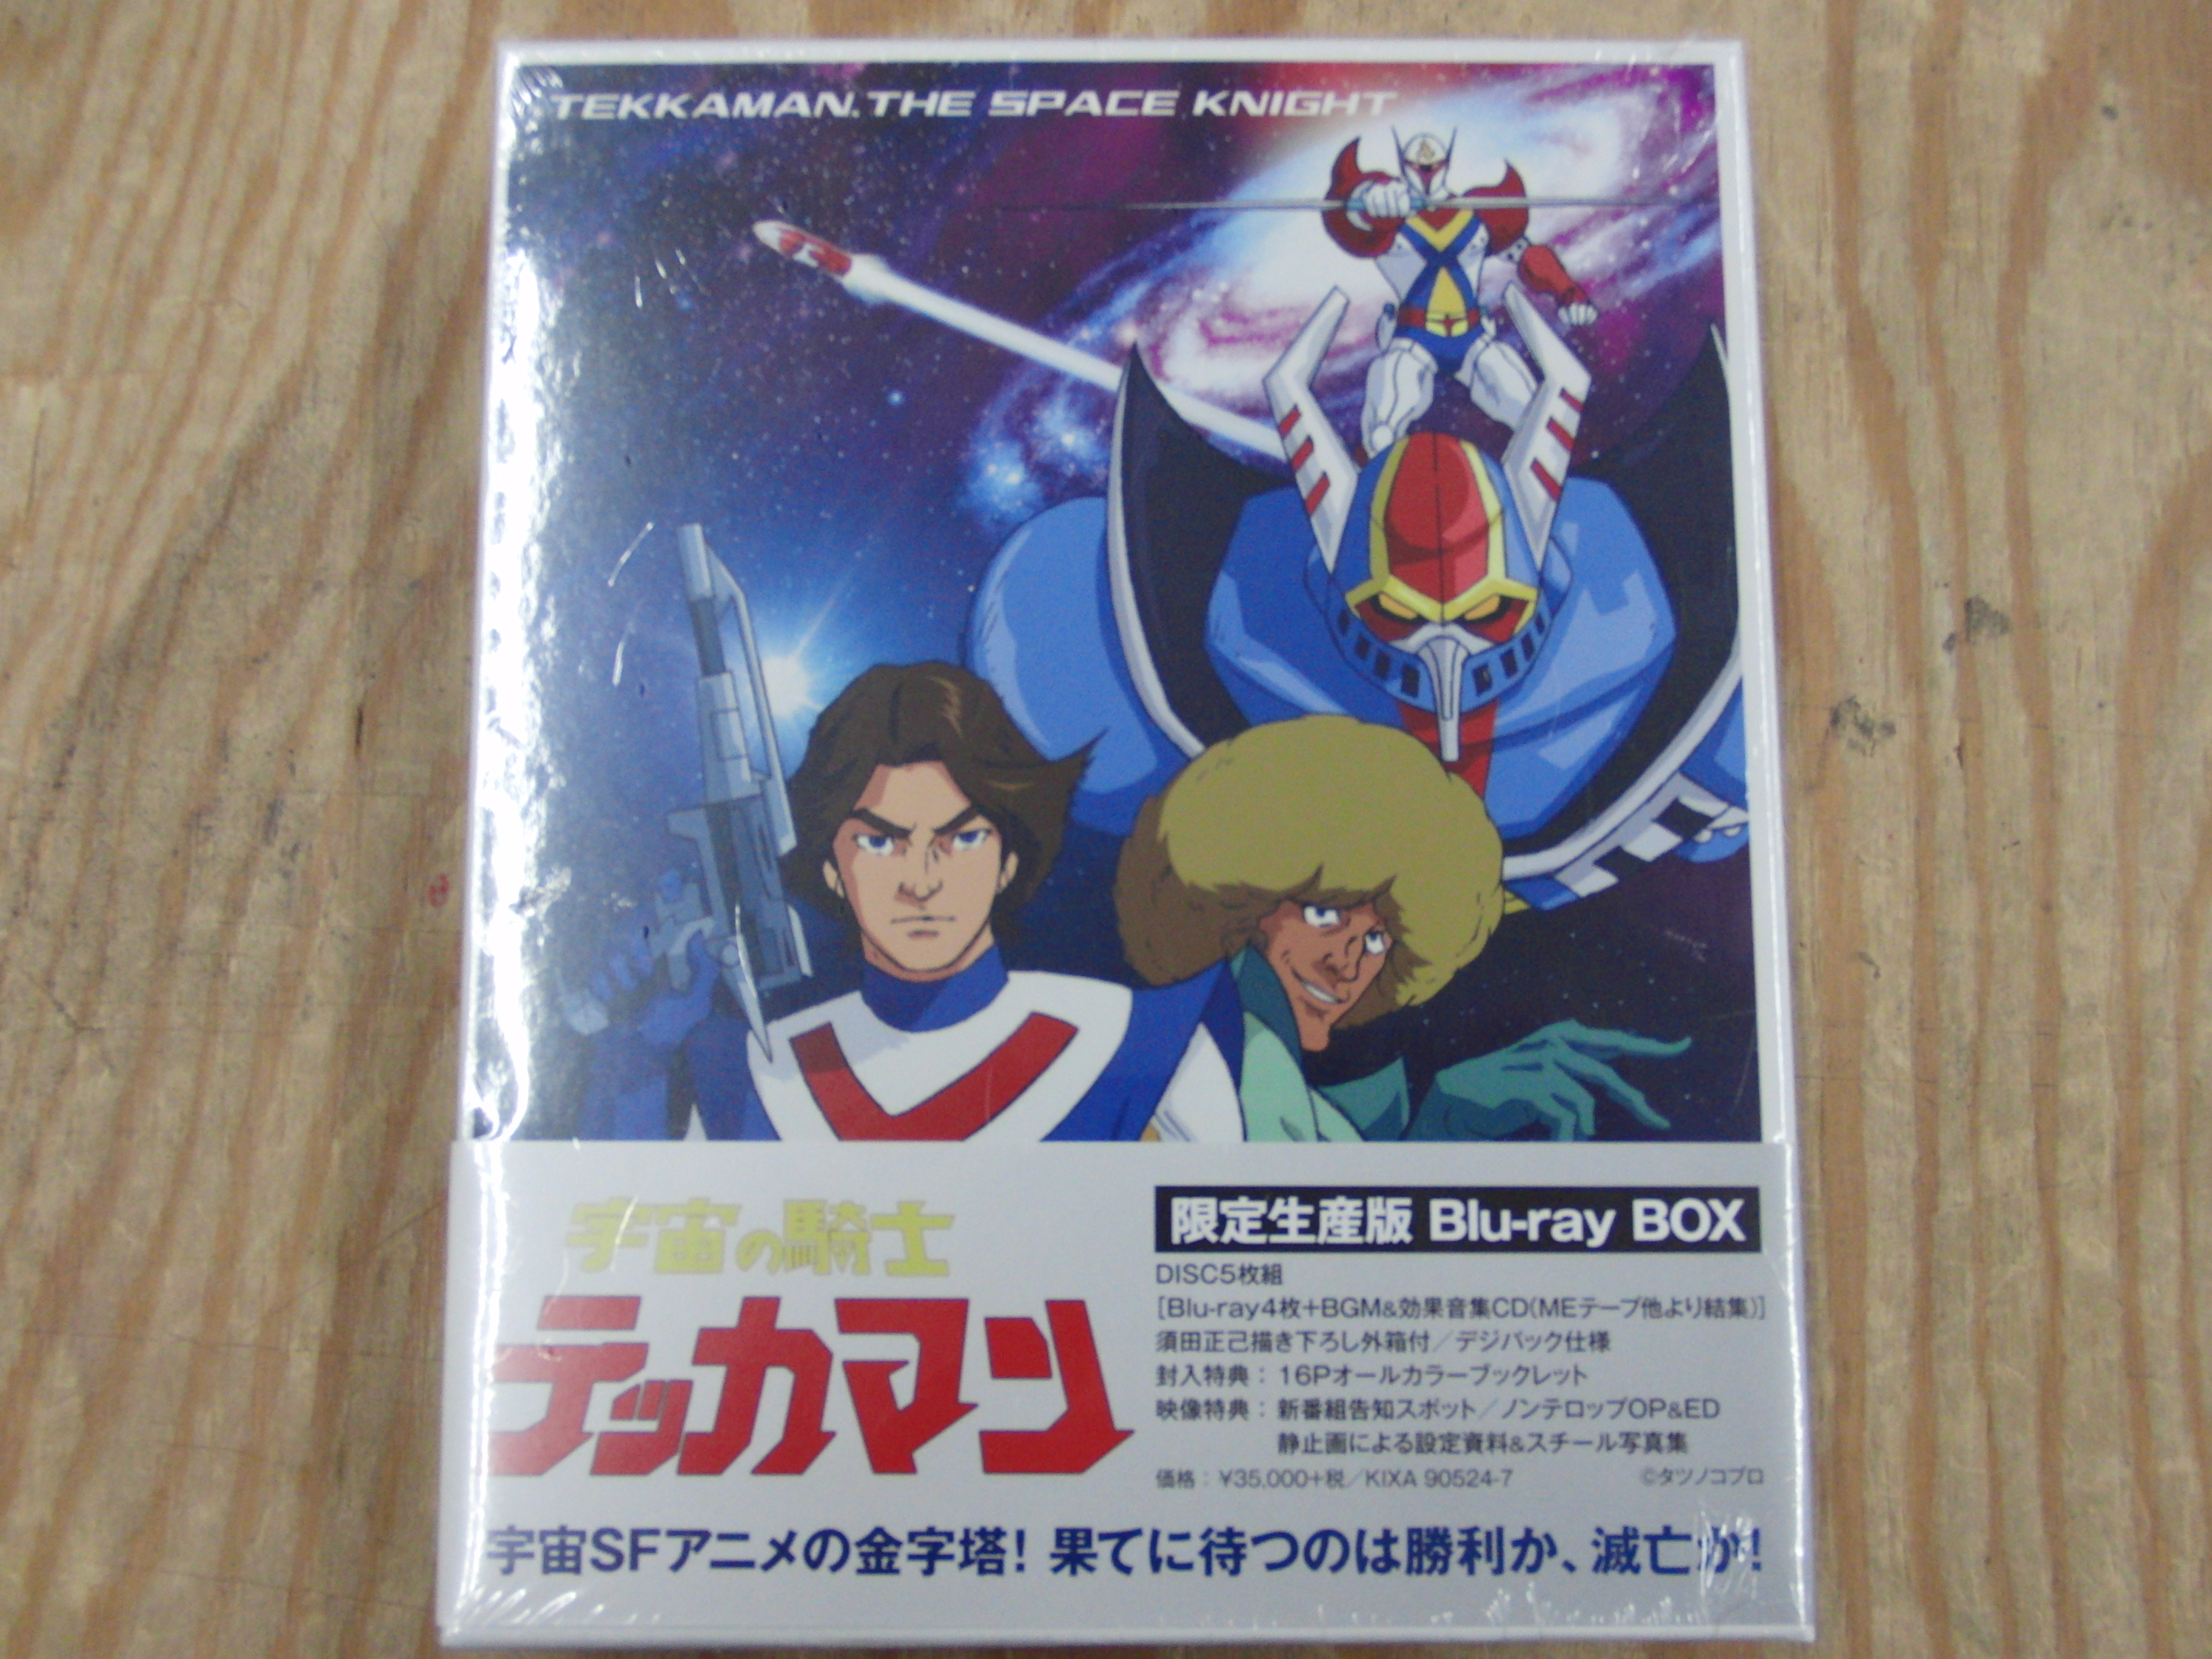 DVD】「宇宙の騎士テッカマン」Blu-ray BOX【限定生産版】買い取りまし